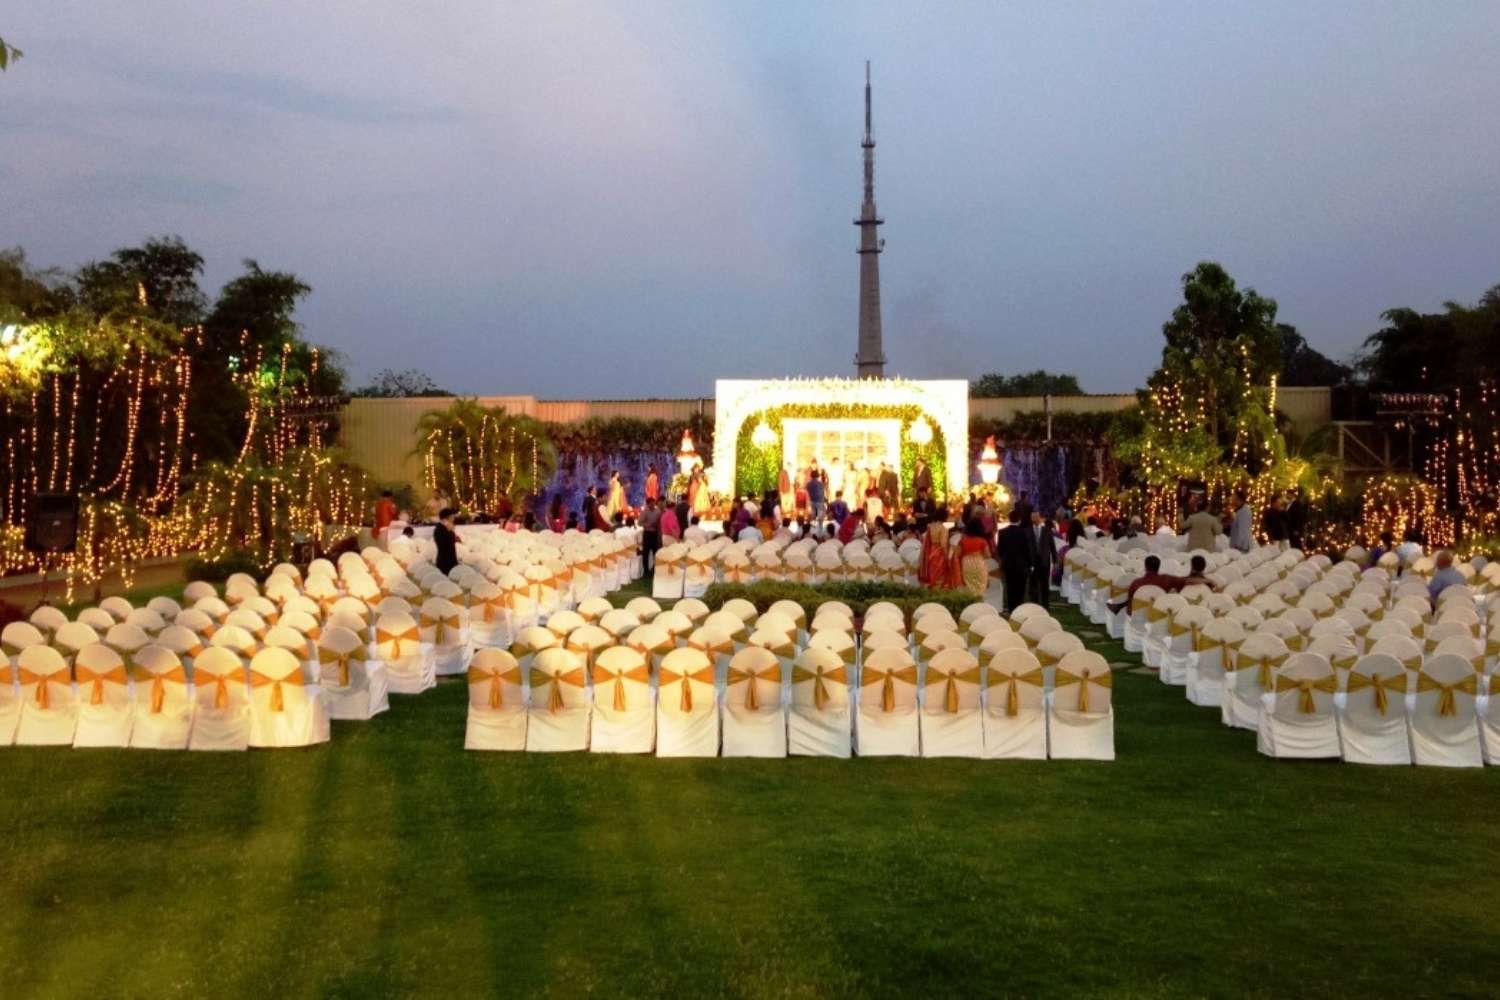 The Royal Senate open-air lawn for weddings